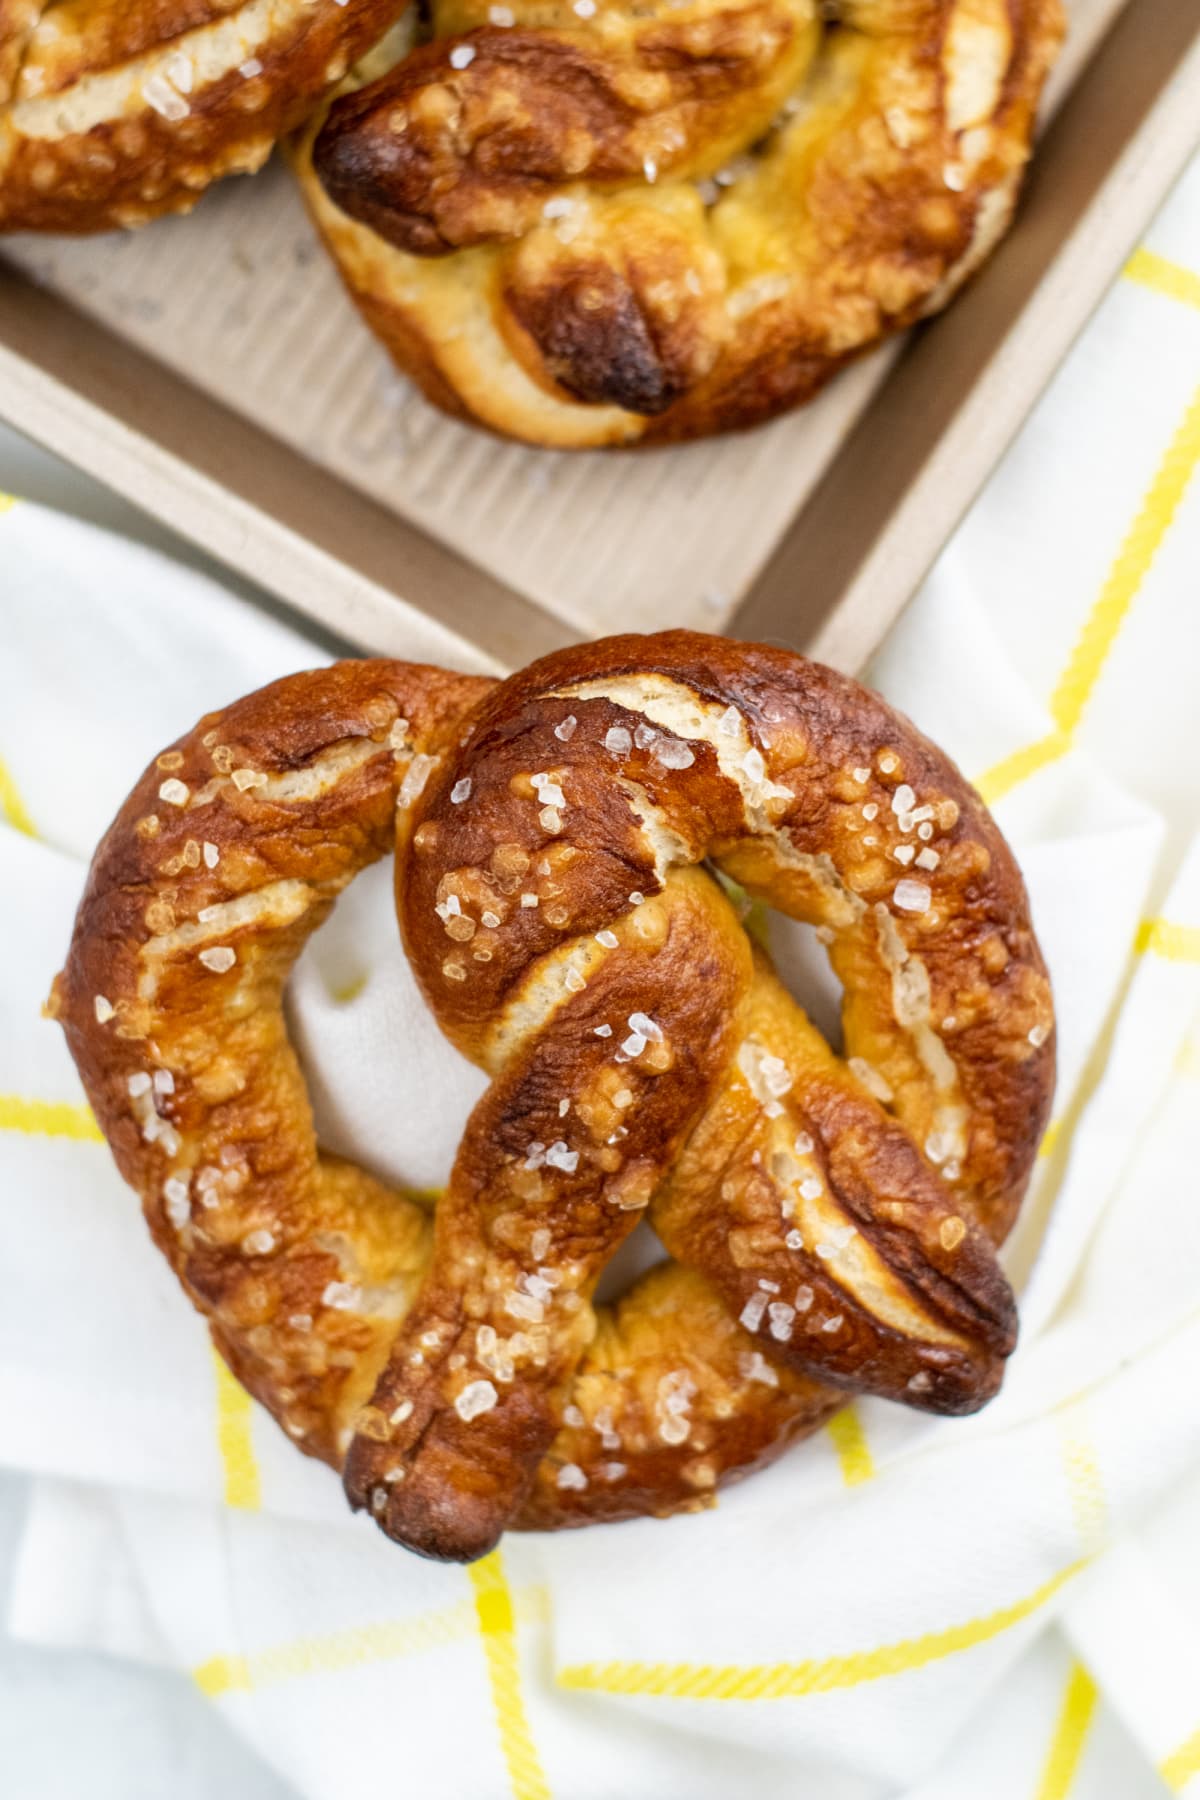 Soft pretzel with tray of pretzels